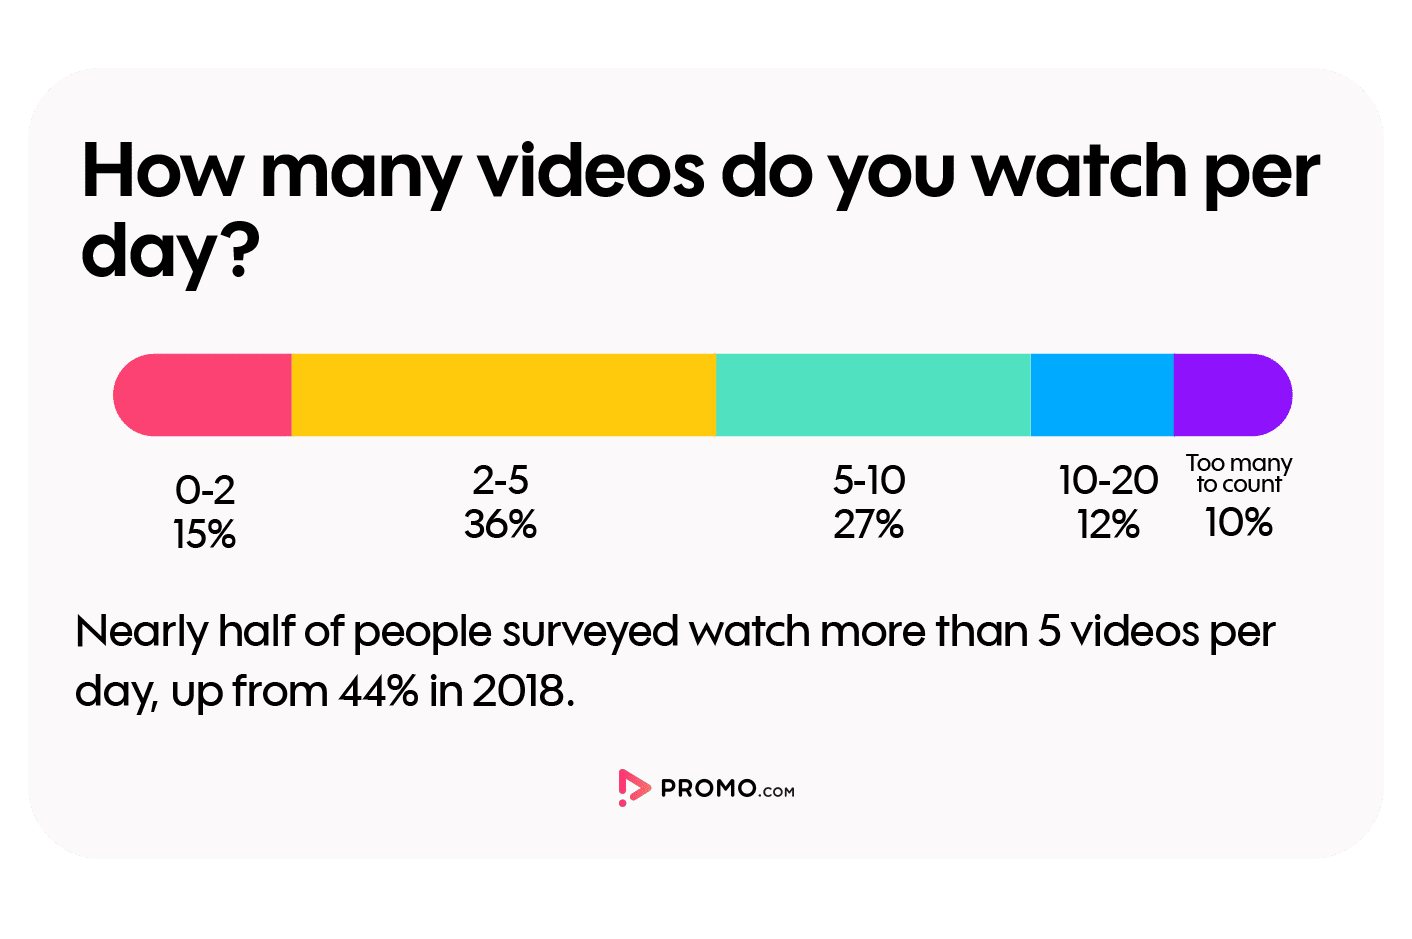 video watching habits 2019